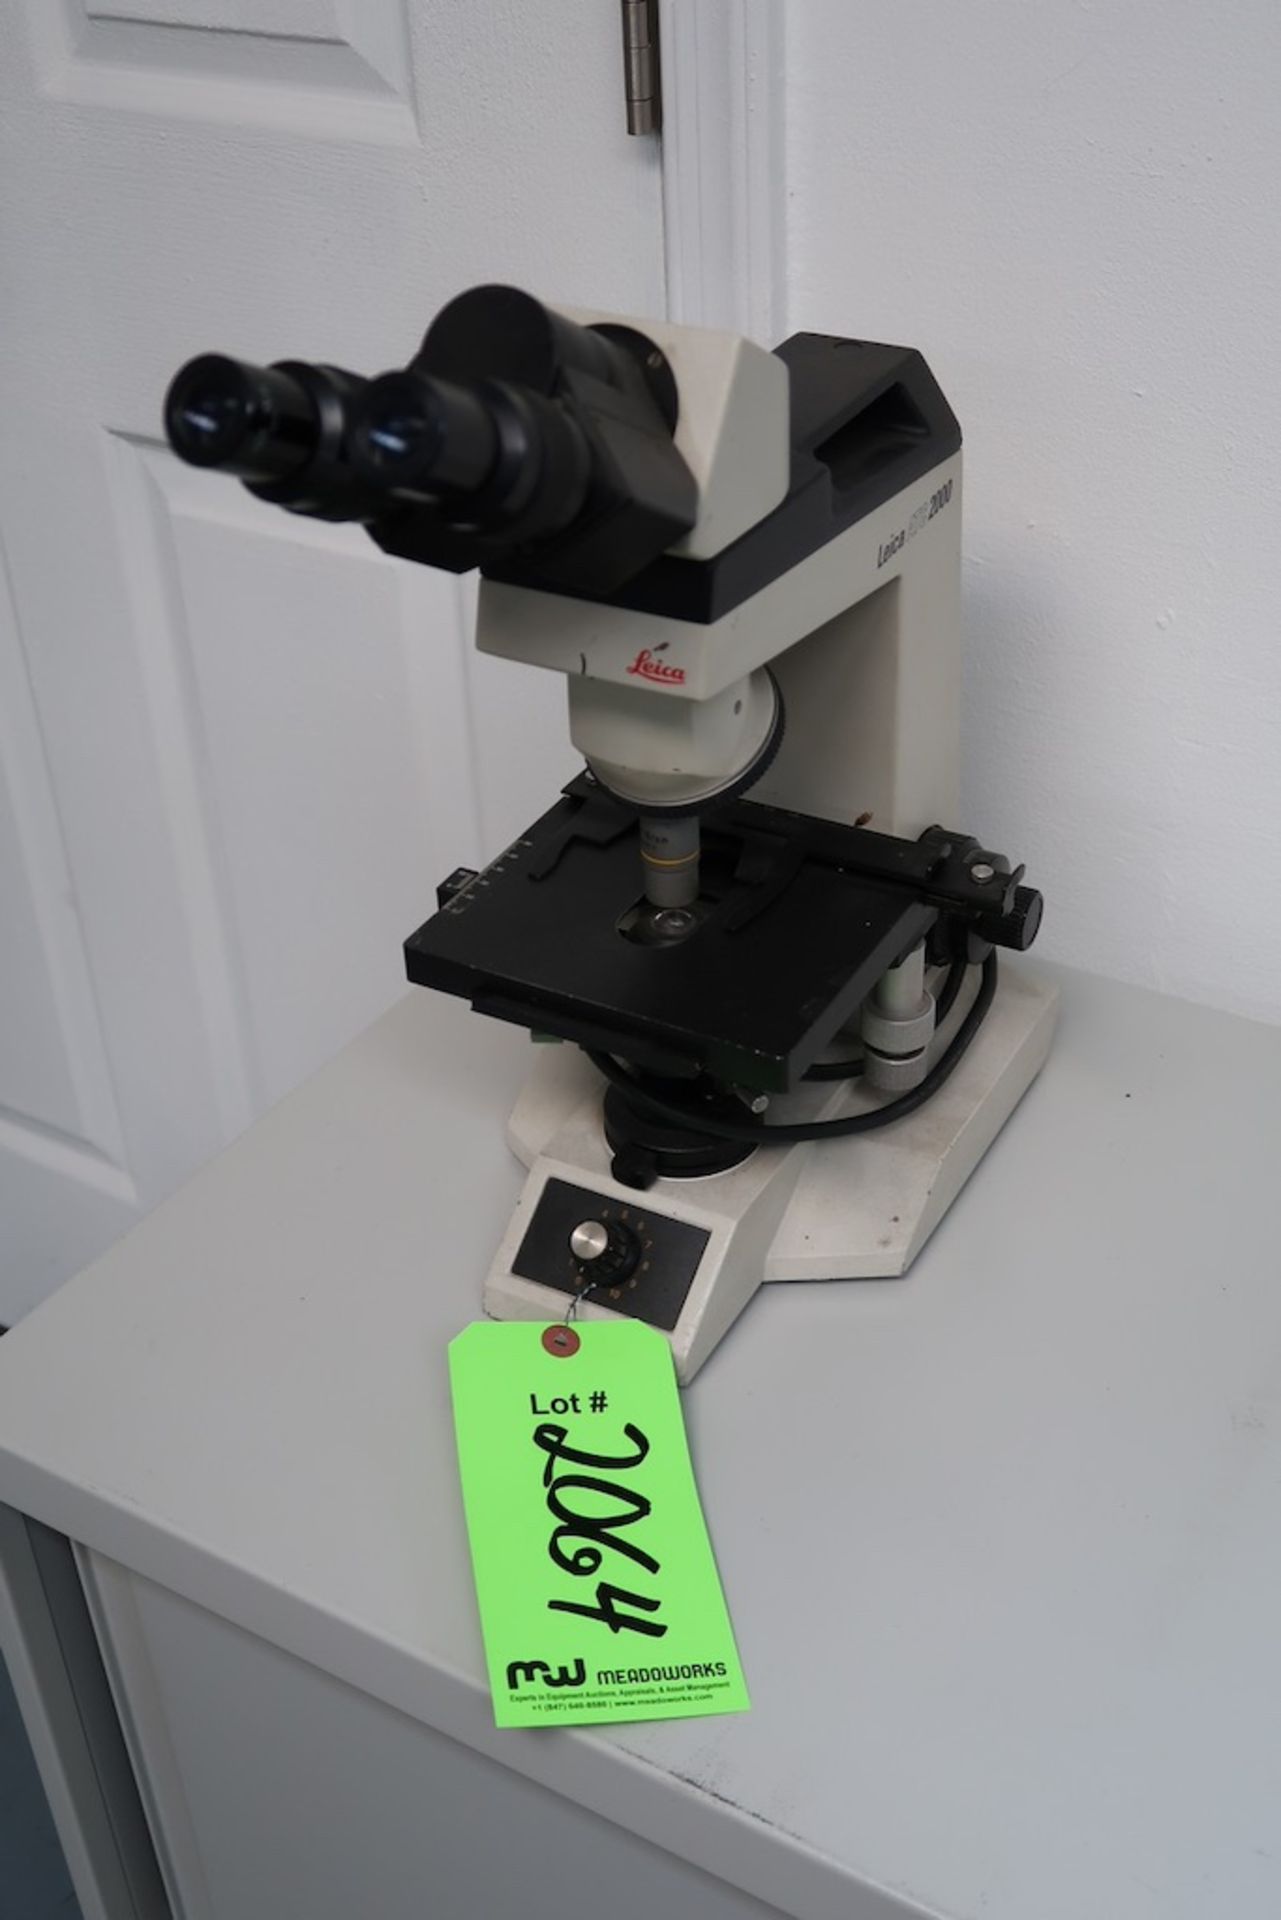 Leica ATC 2000 Benchtop Microscope